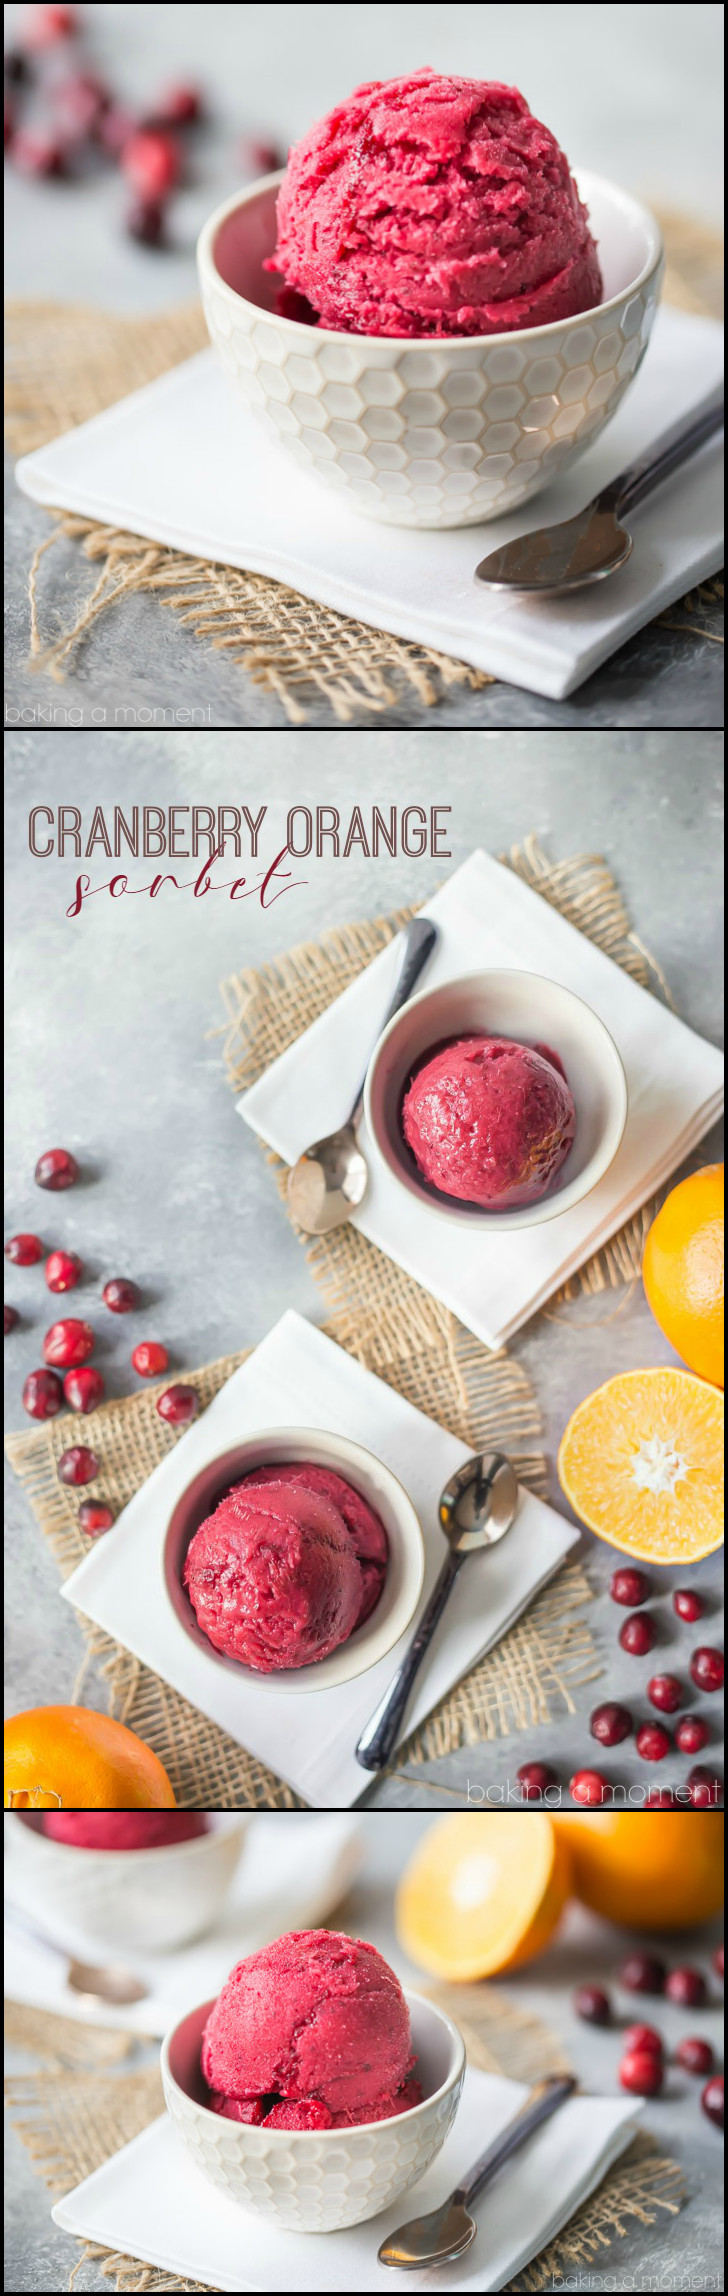 Light Desserts For Winter
 Cranberry orange sorbet a light and refreshing dessert